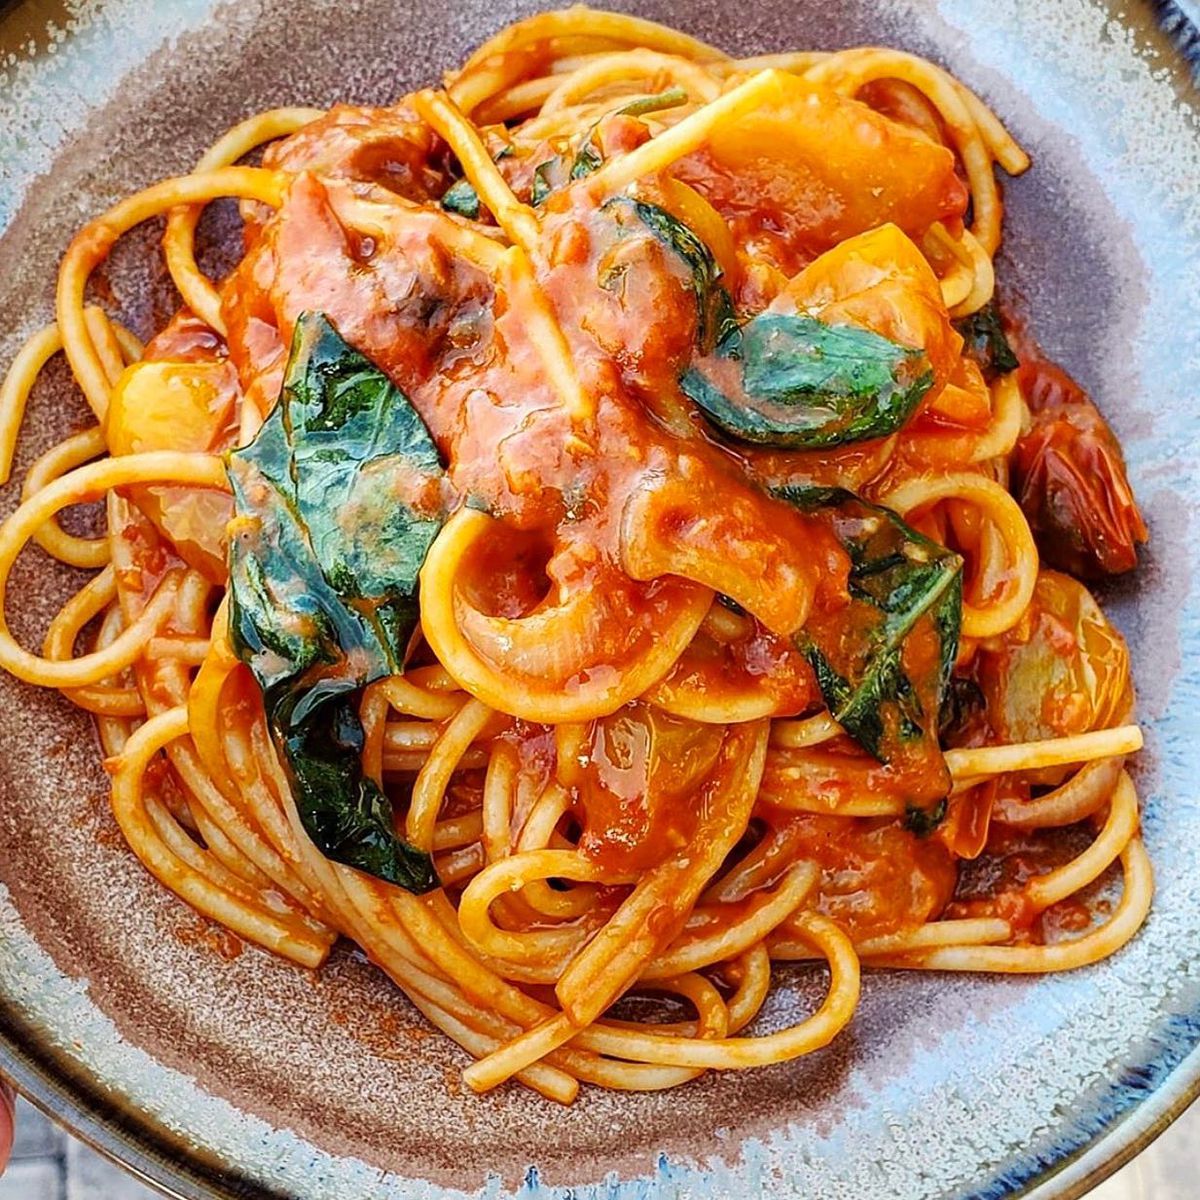 Spaghetti with a tomato sauce and basil